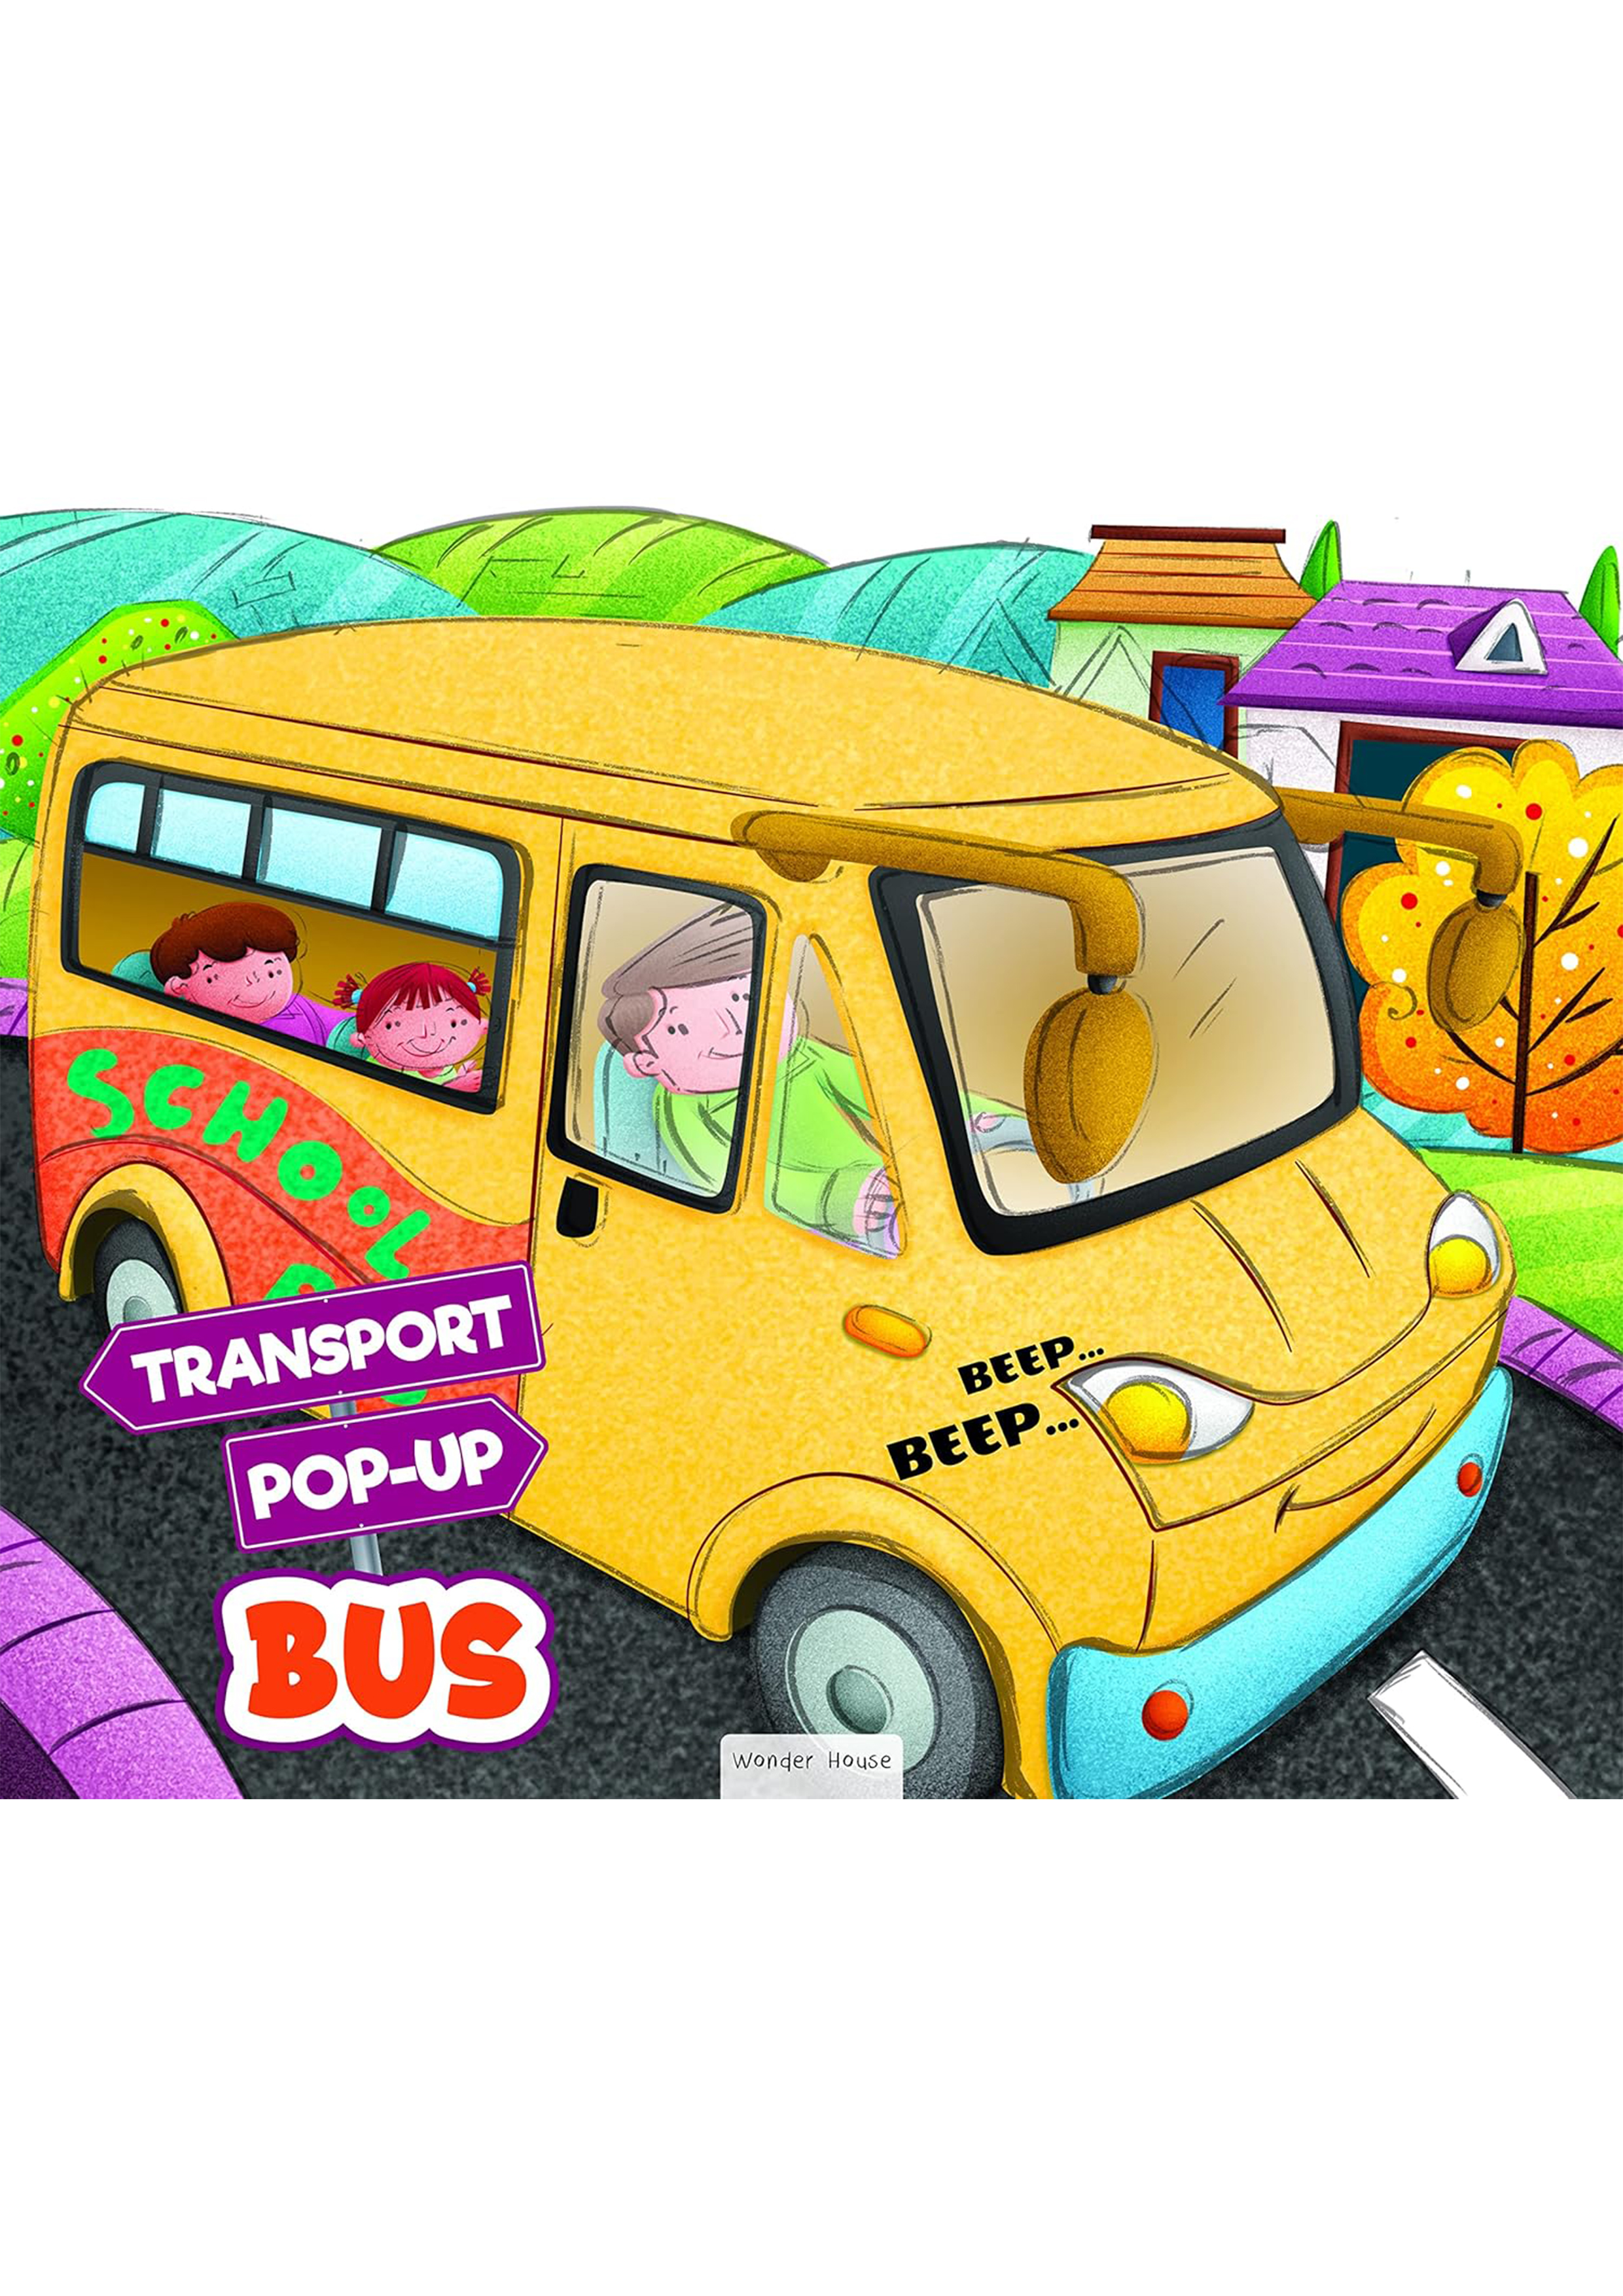 Pop-up Transport - Bus (হার্ডকভার)